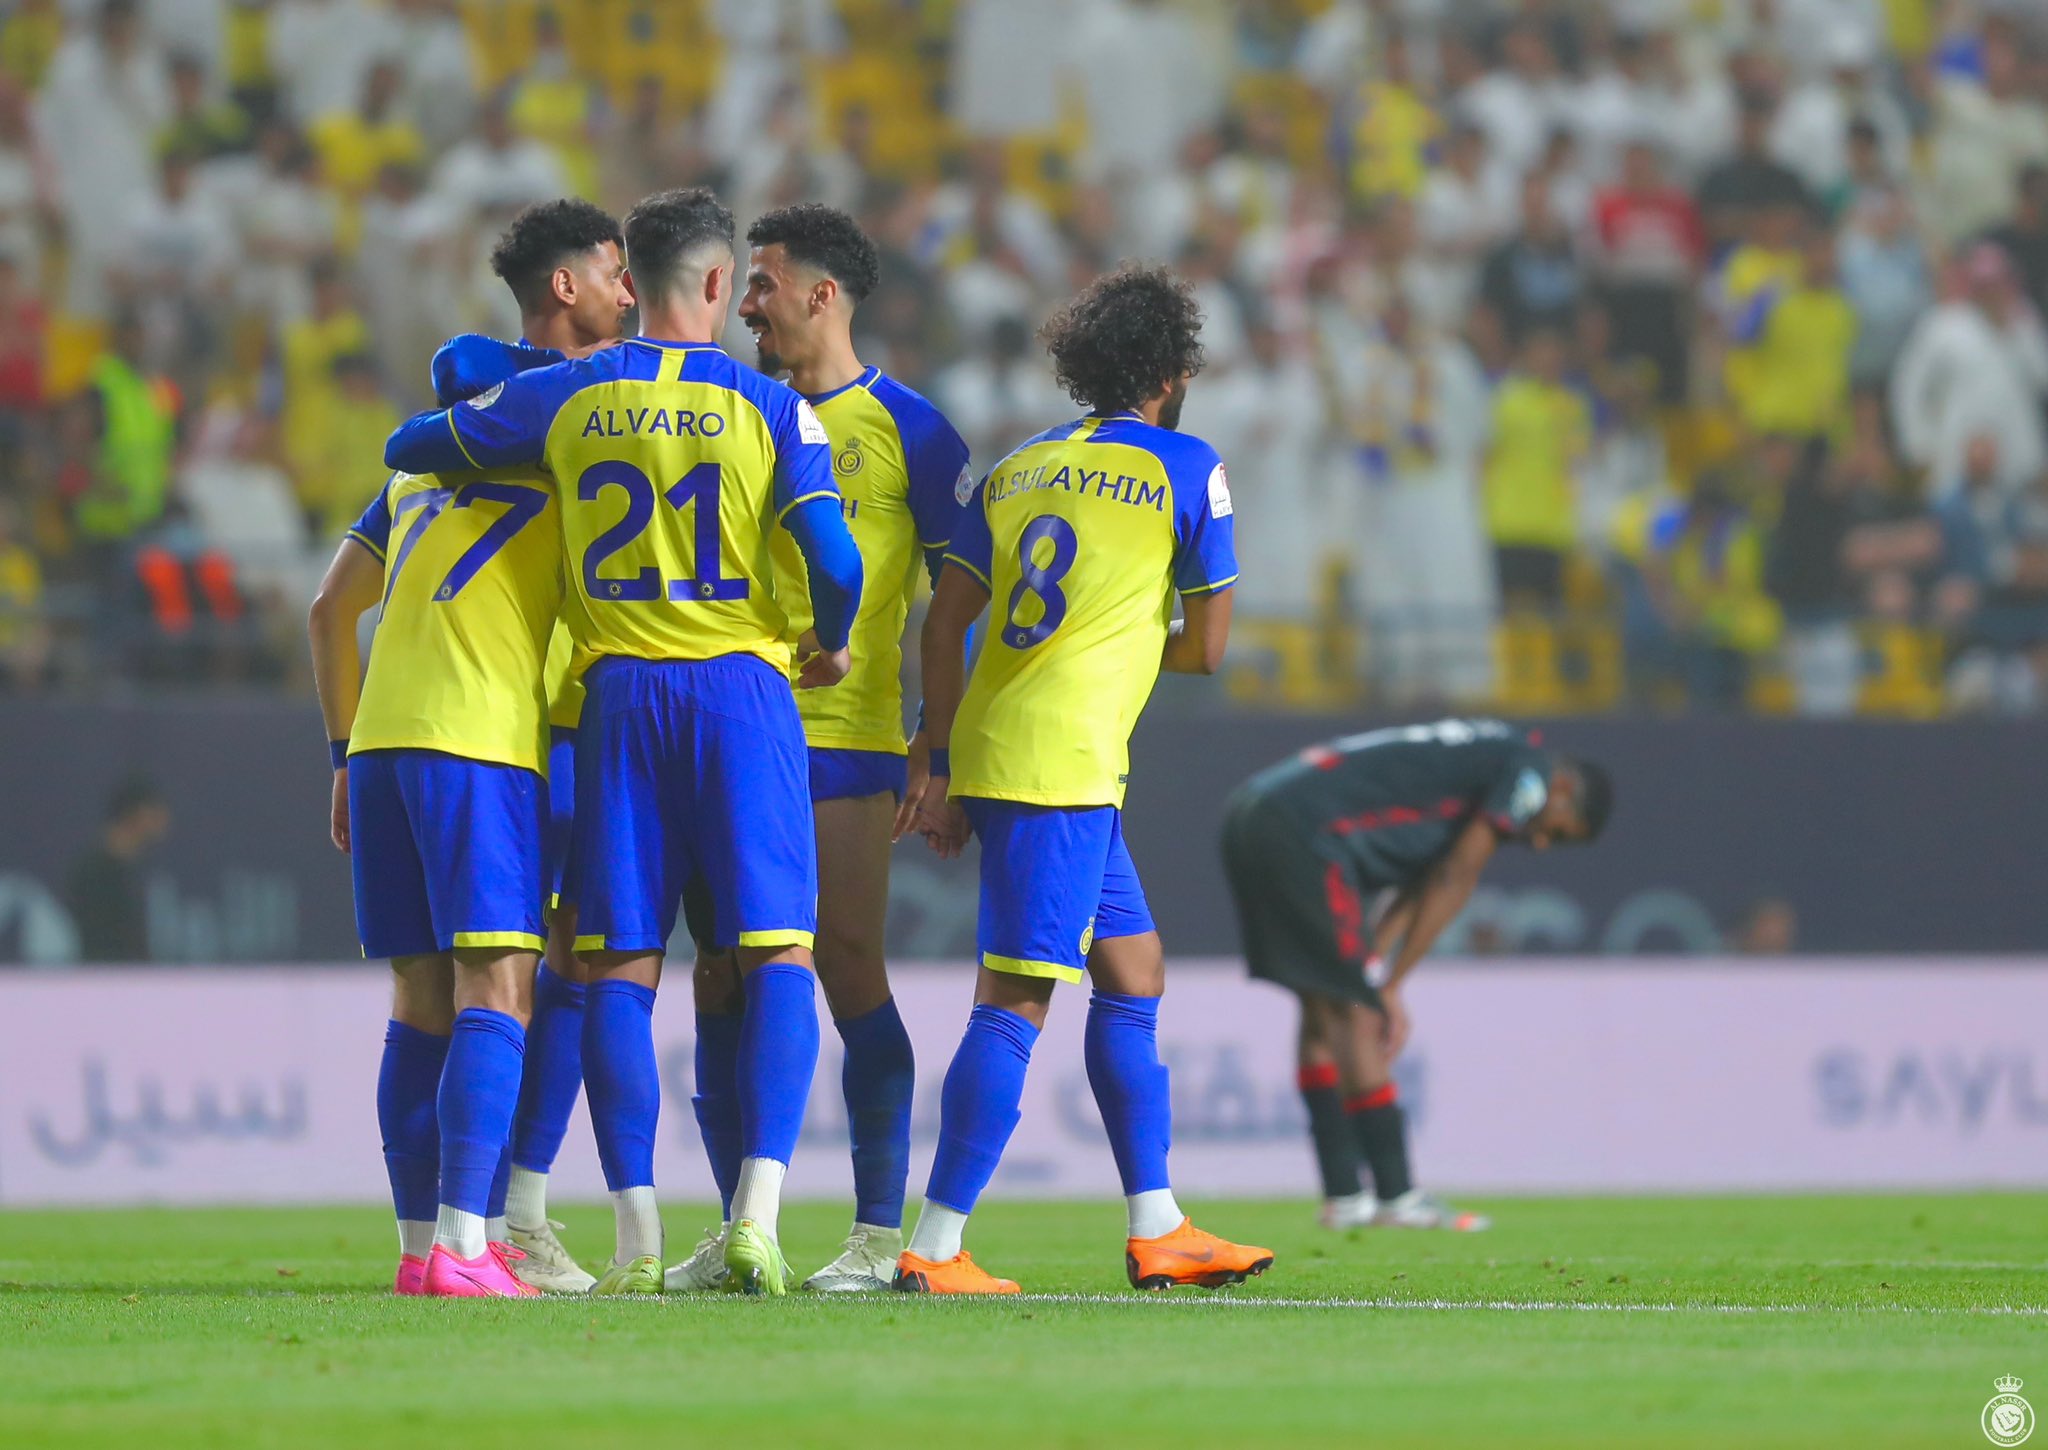 Al Nassr vs Al Khaleej LIVE Streaming: Cristiano Ronaldo and Co aim 3 points against strugglers Al Khaleej in Saudi Pro League to push title charge - Follow LIVE Updates